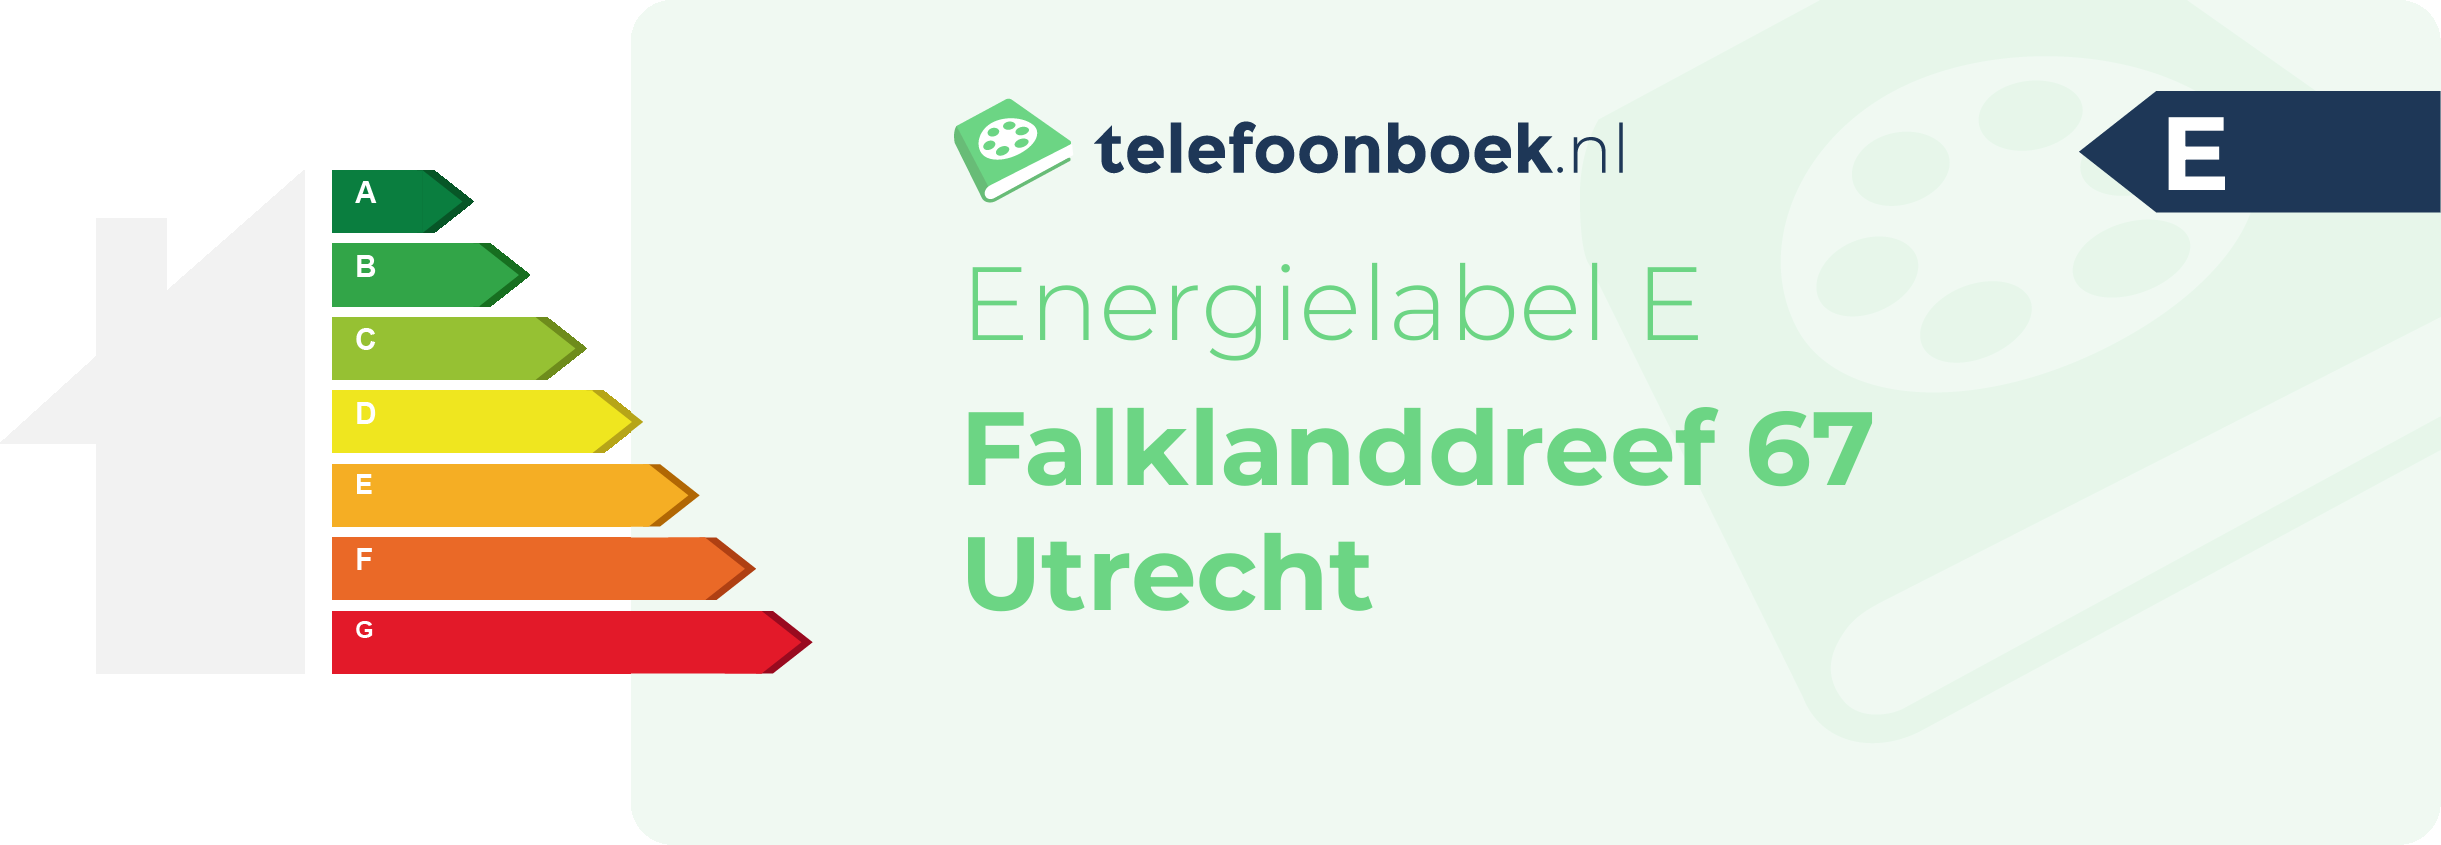 Energielabel Falklanddreef 67 Utrecht